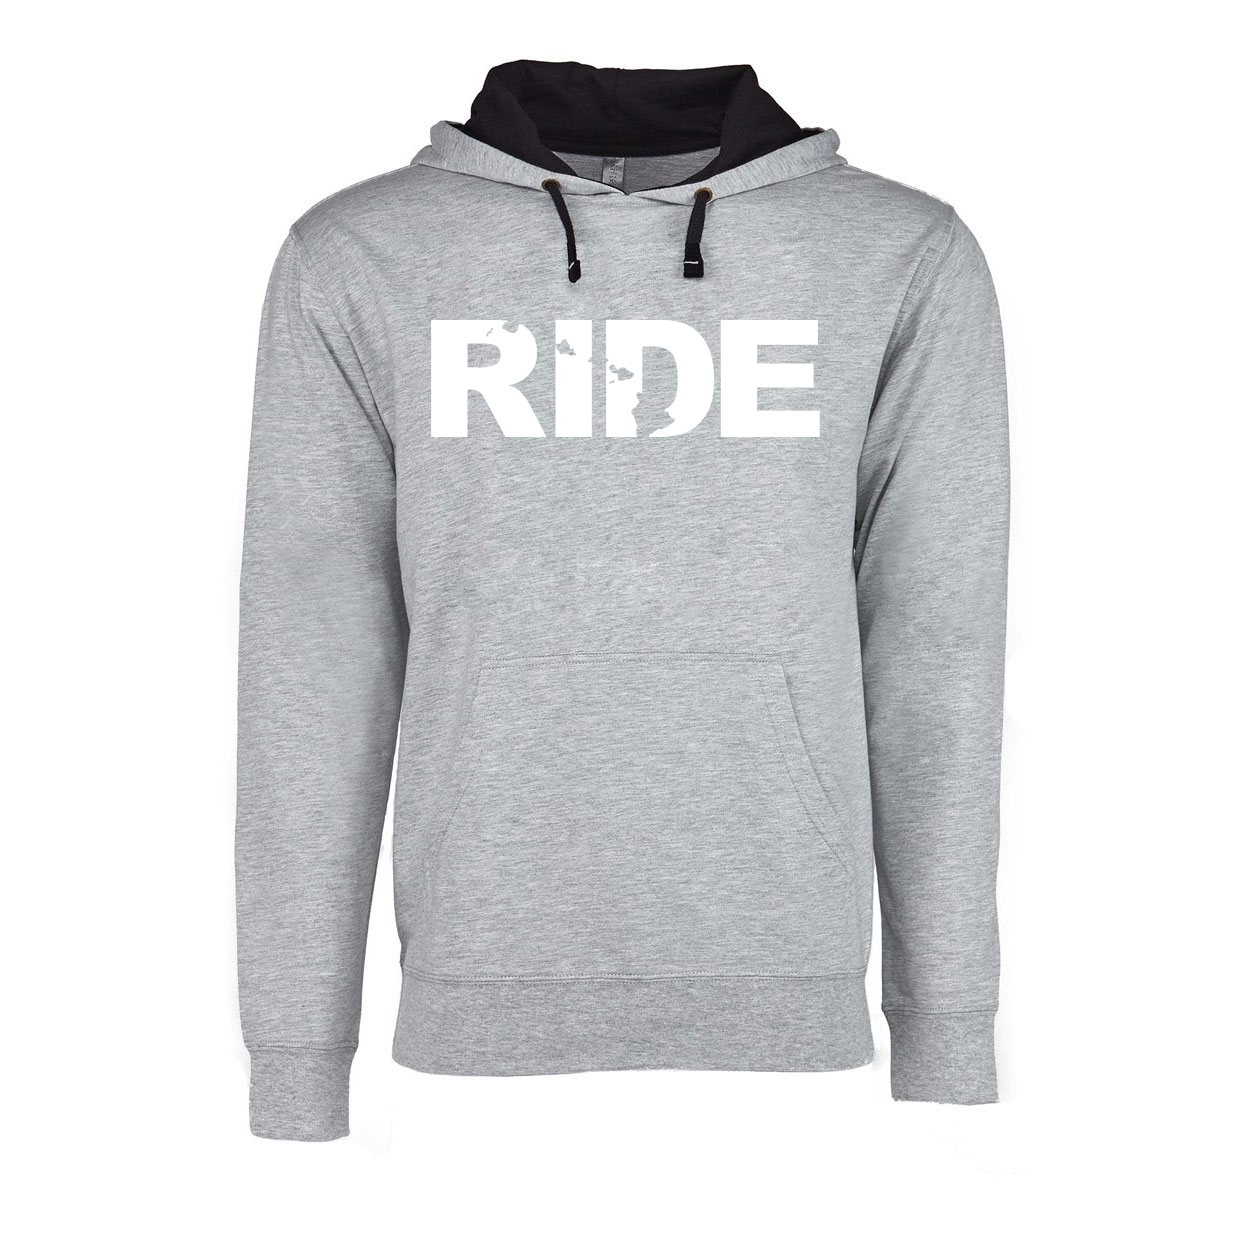 Ride Hawaii Classic Lightweight Sweatshirt Heather Gray/Black (White Logo)